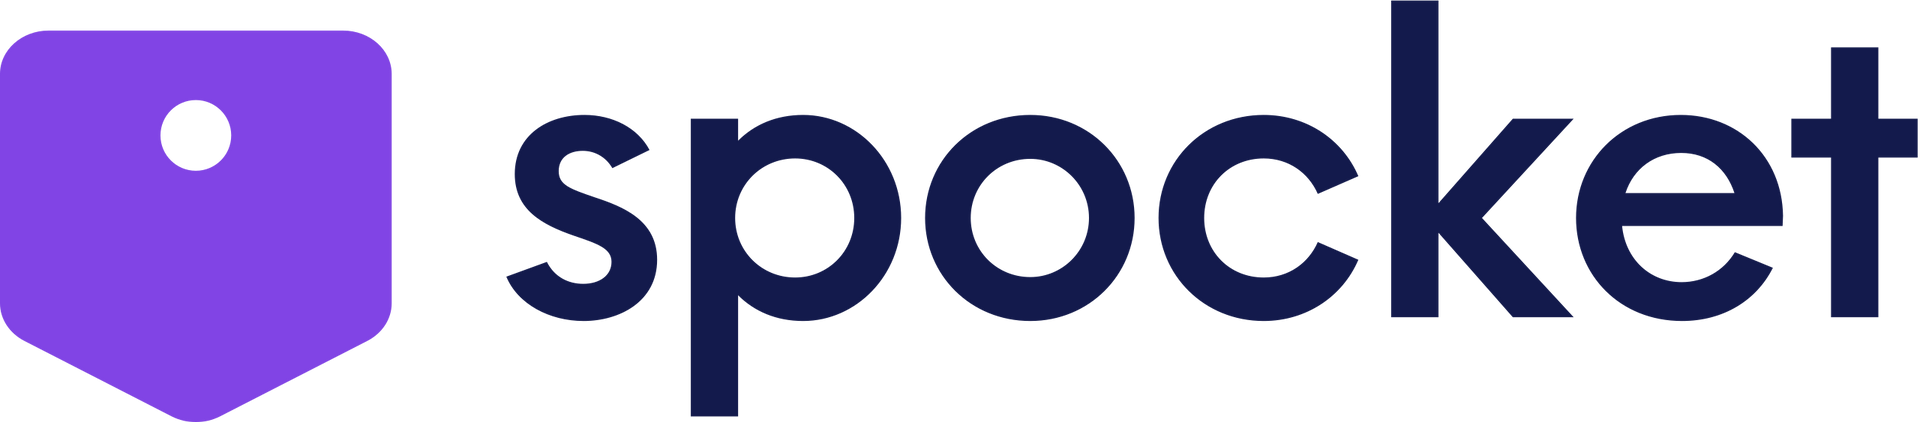 Image of Spocket Logo